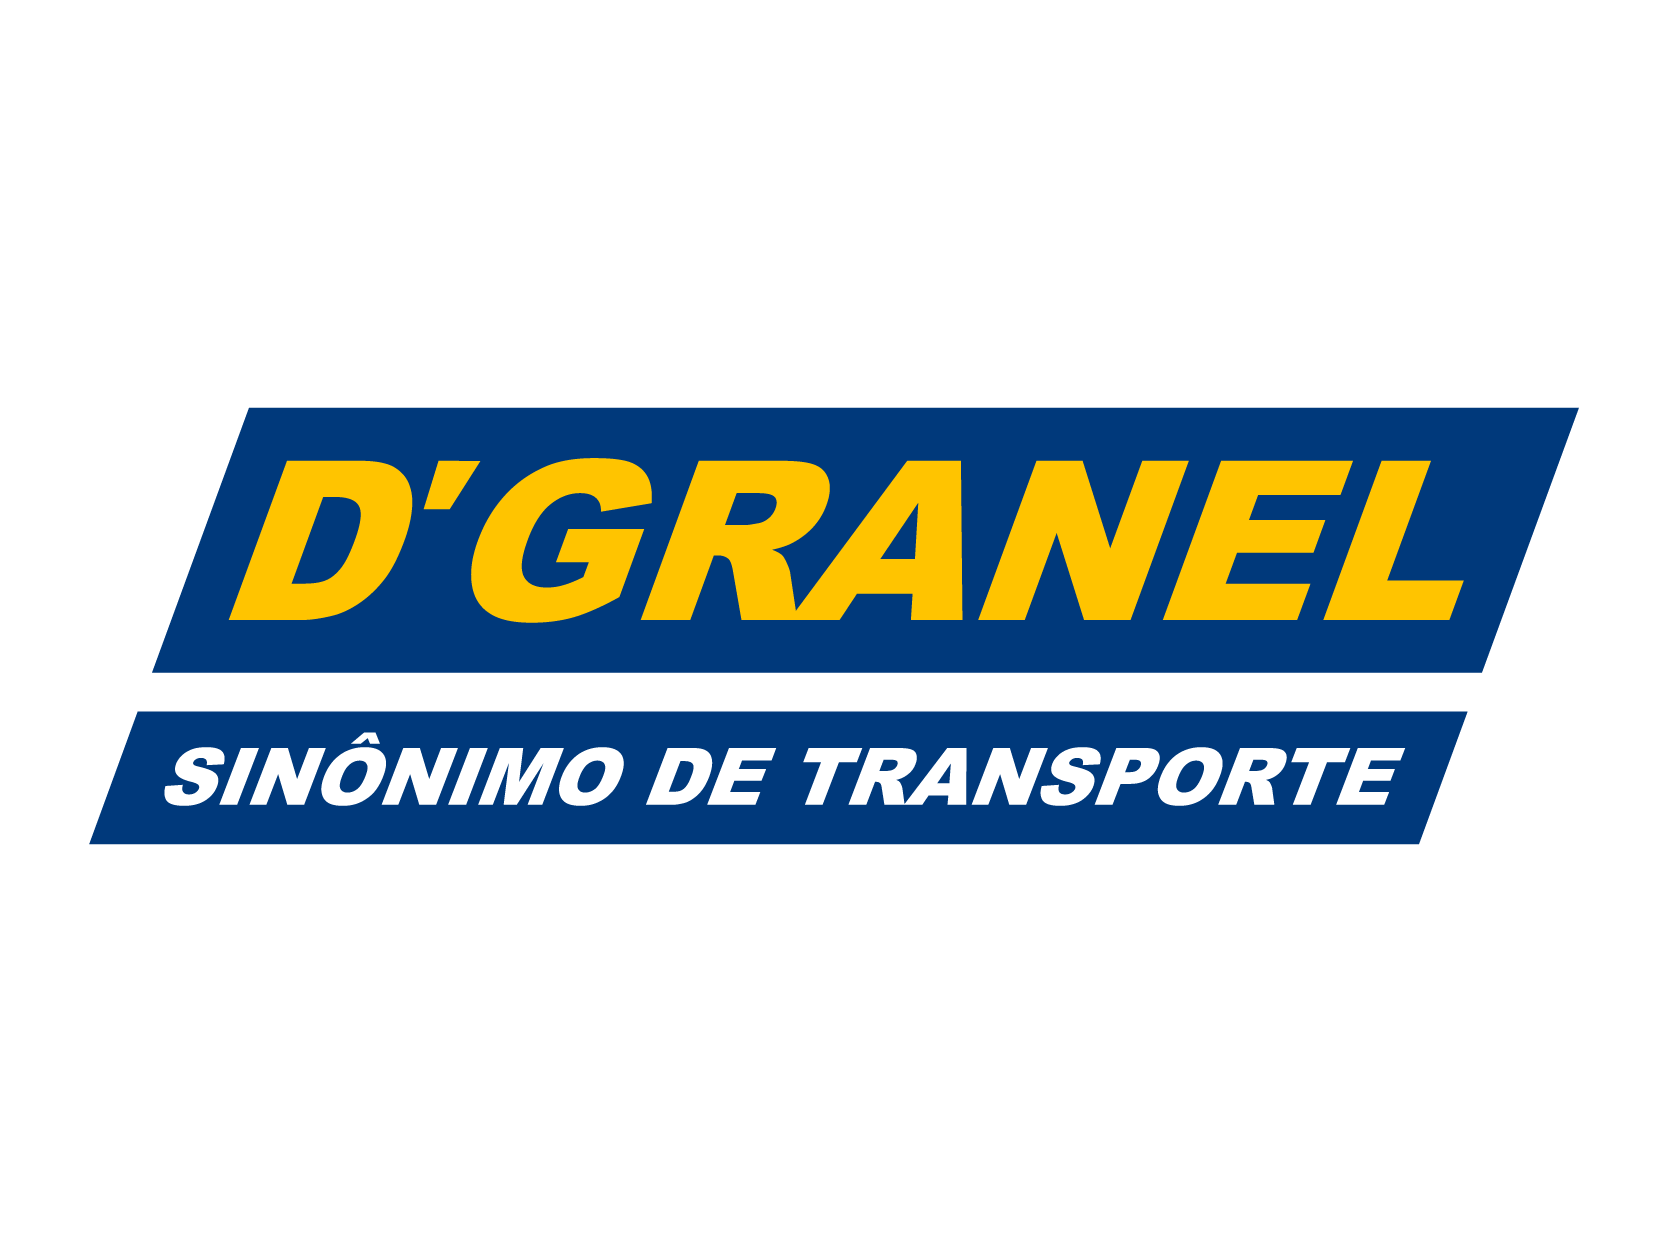 D'Granel-01